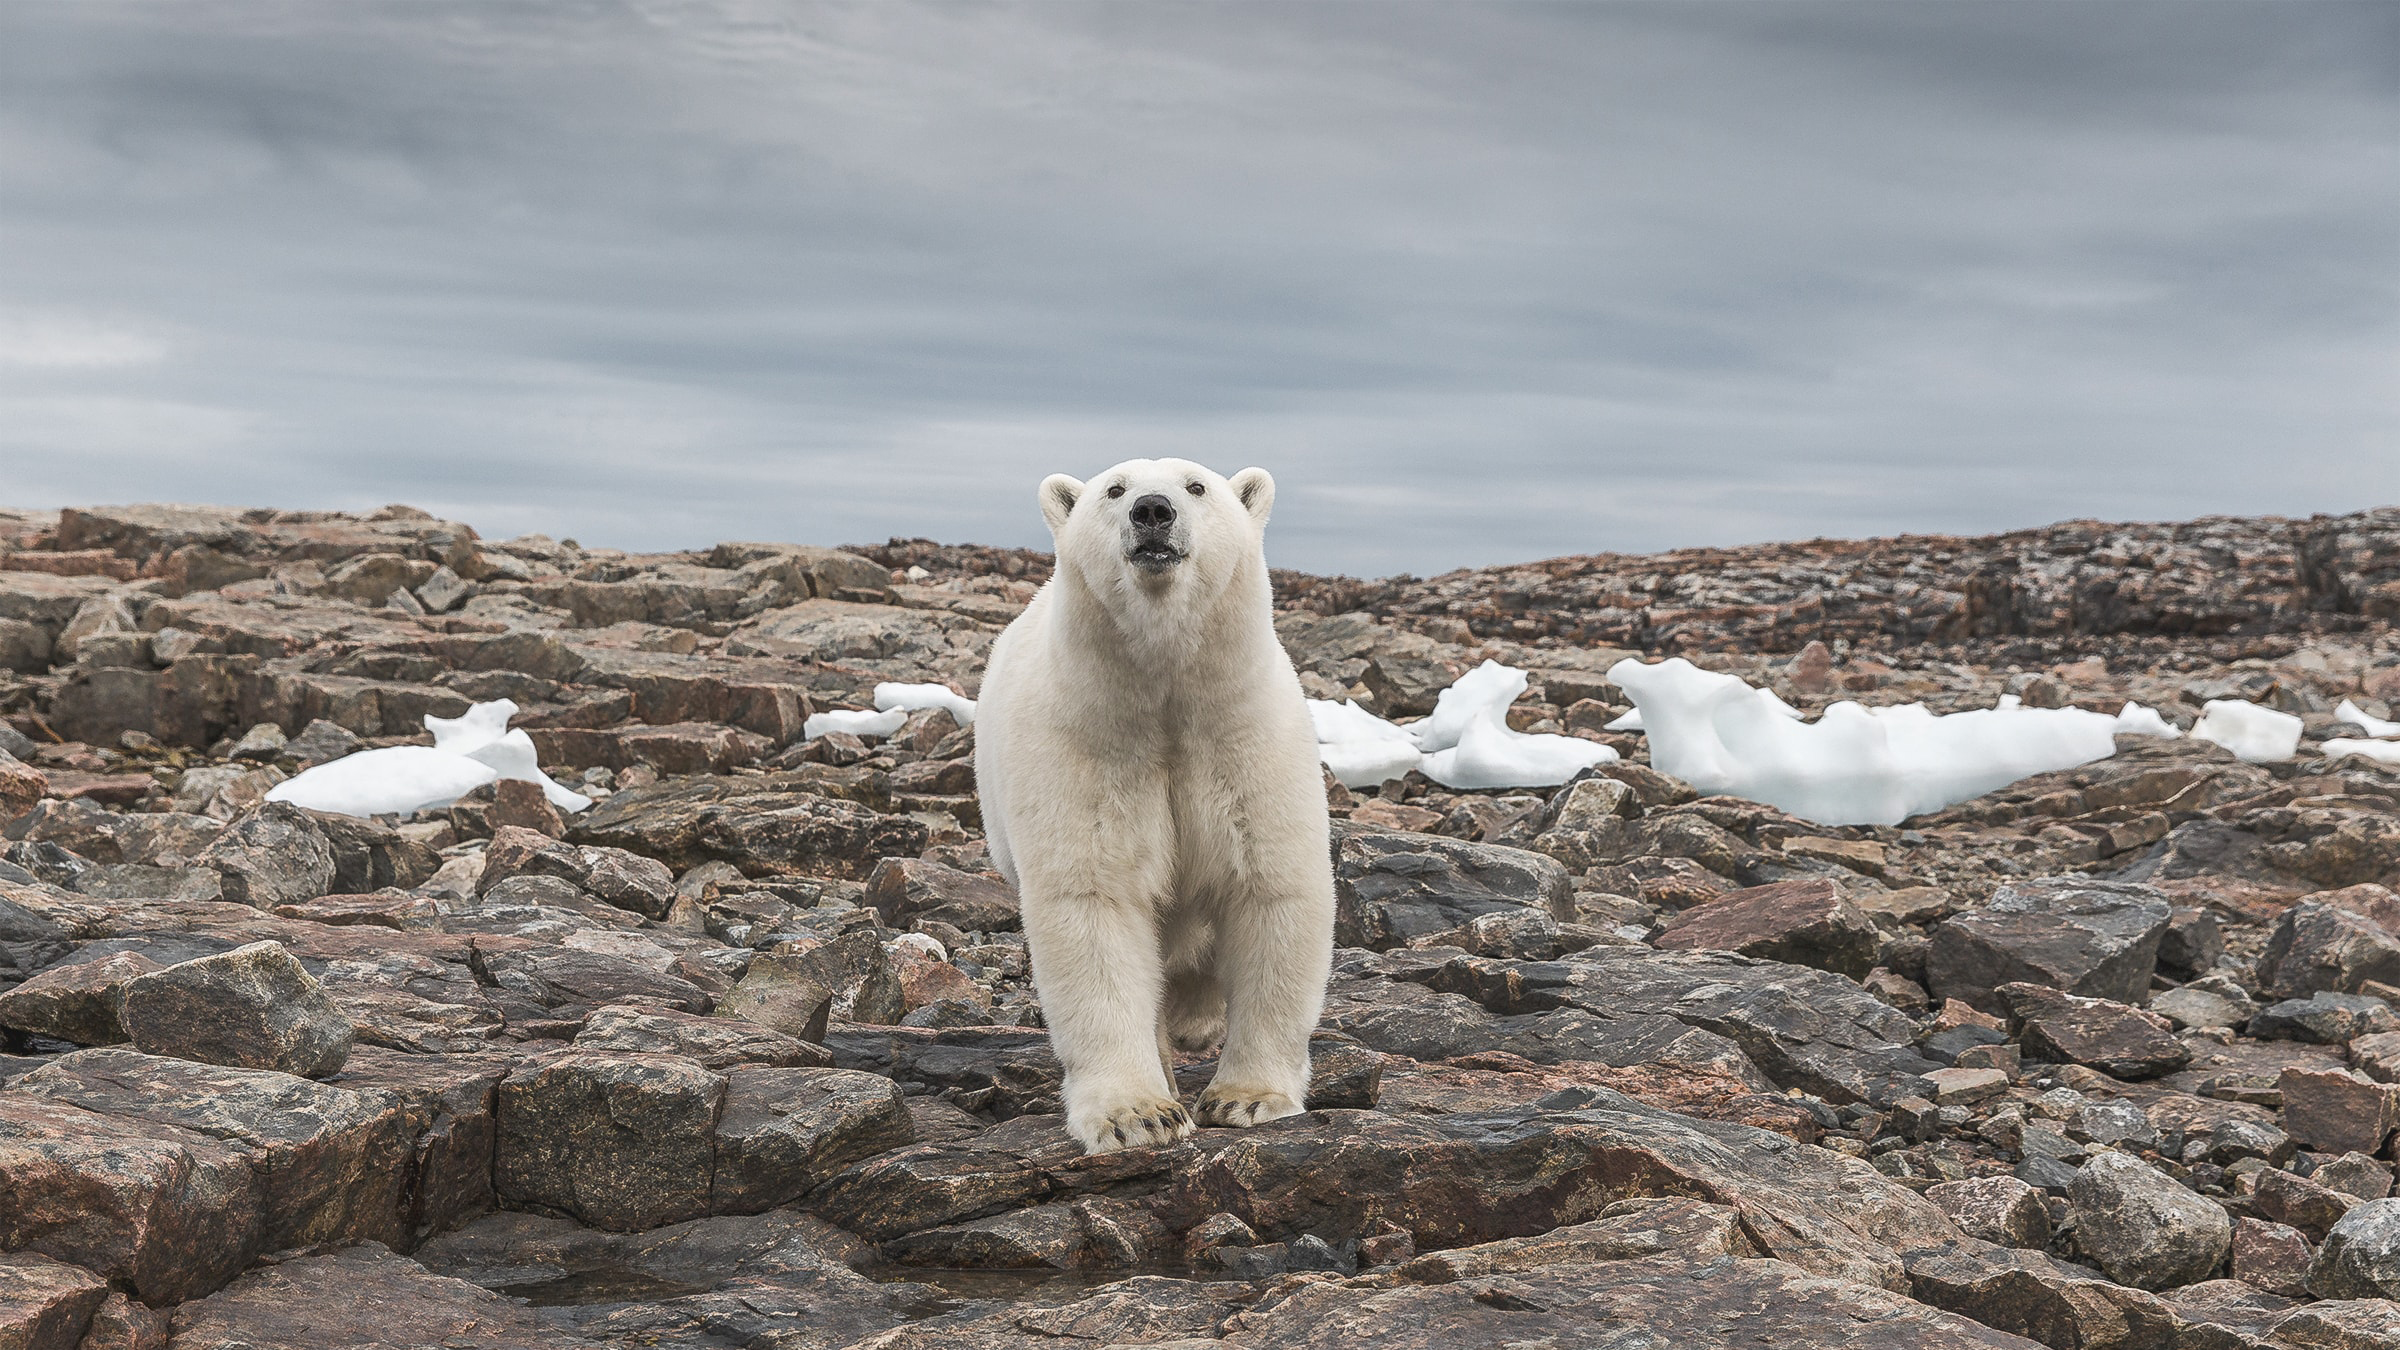 Polar bear in an ice free arctic